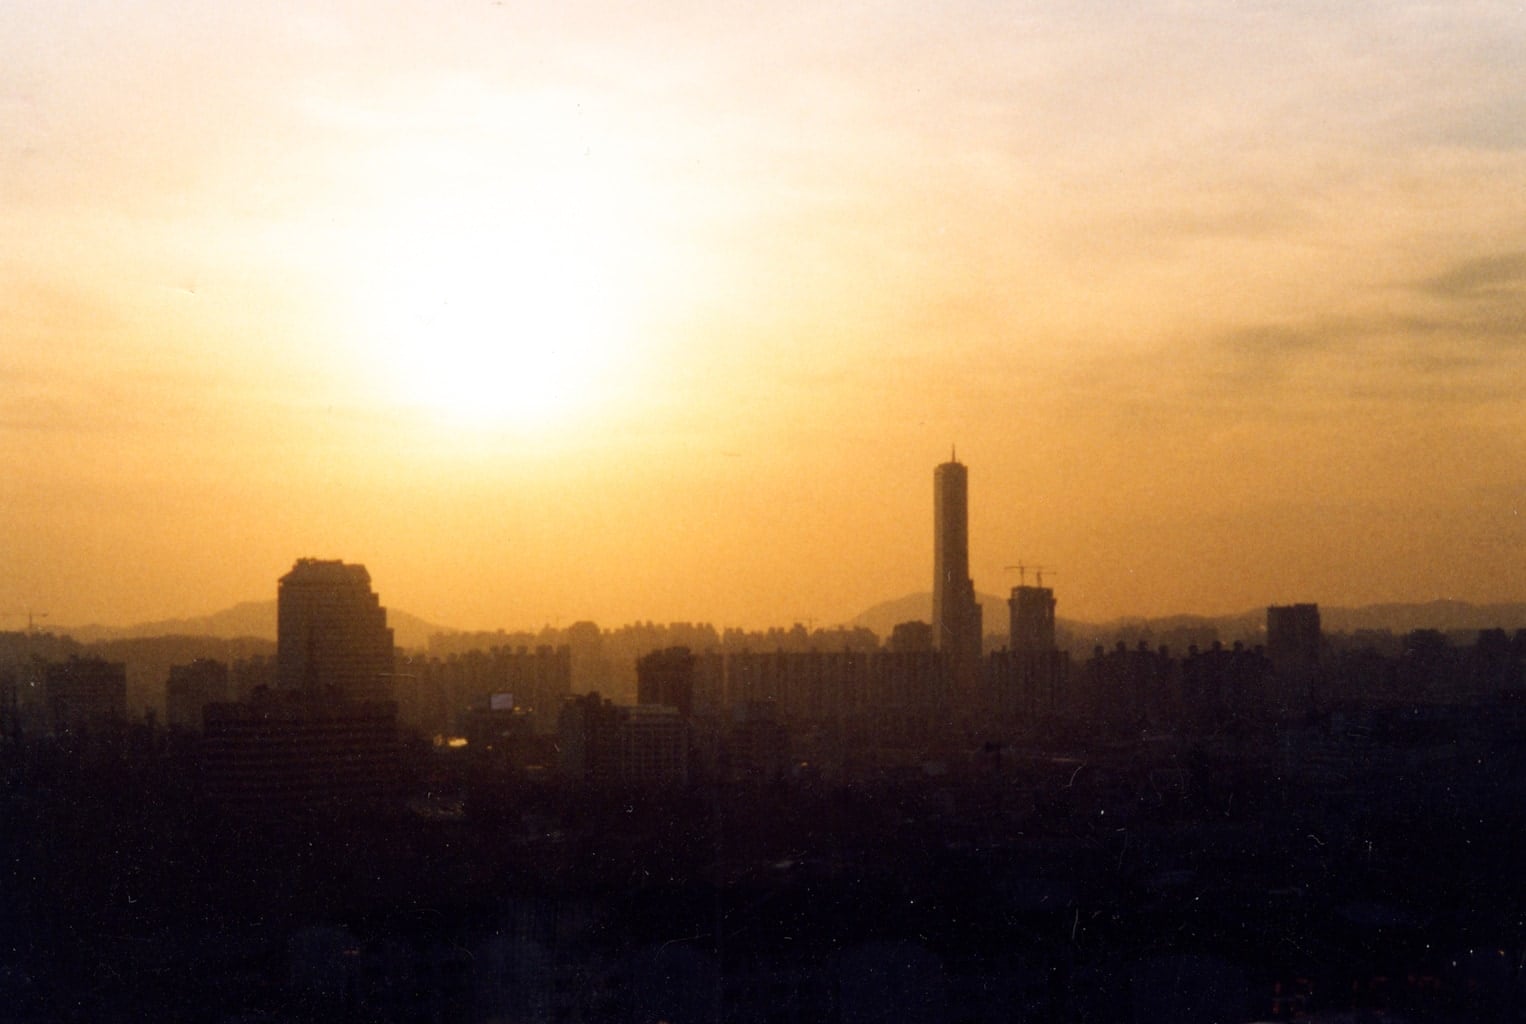 Seoul skyline in 2001